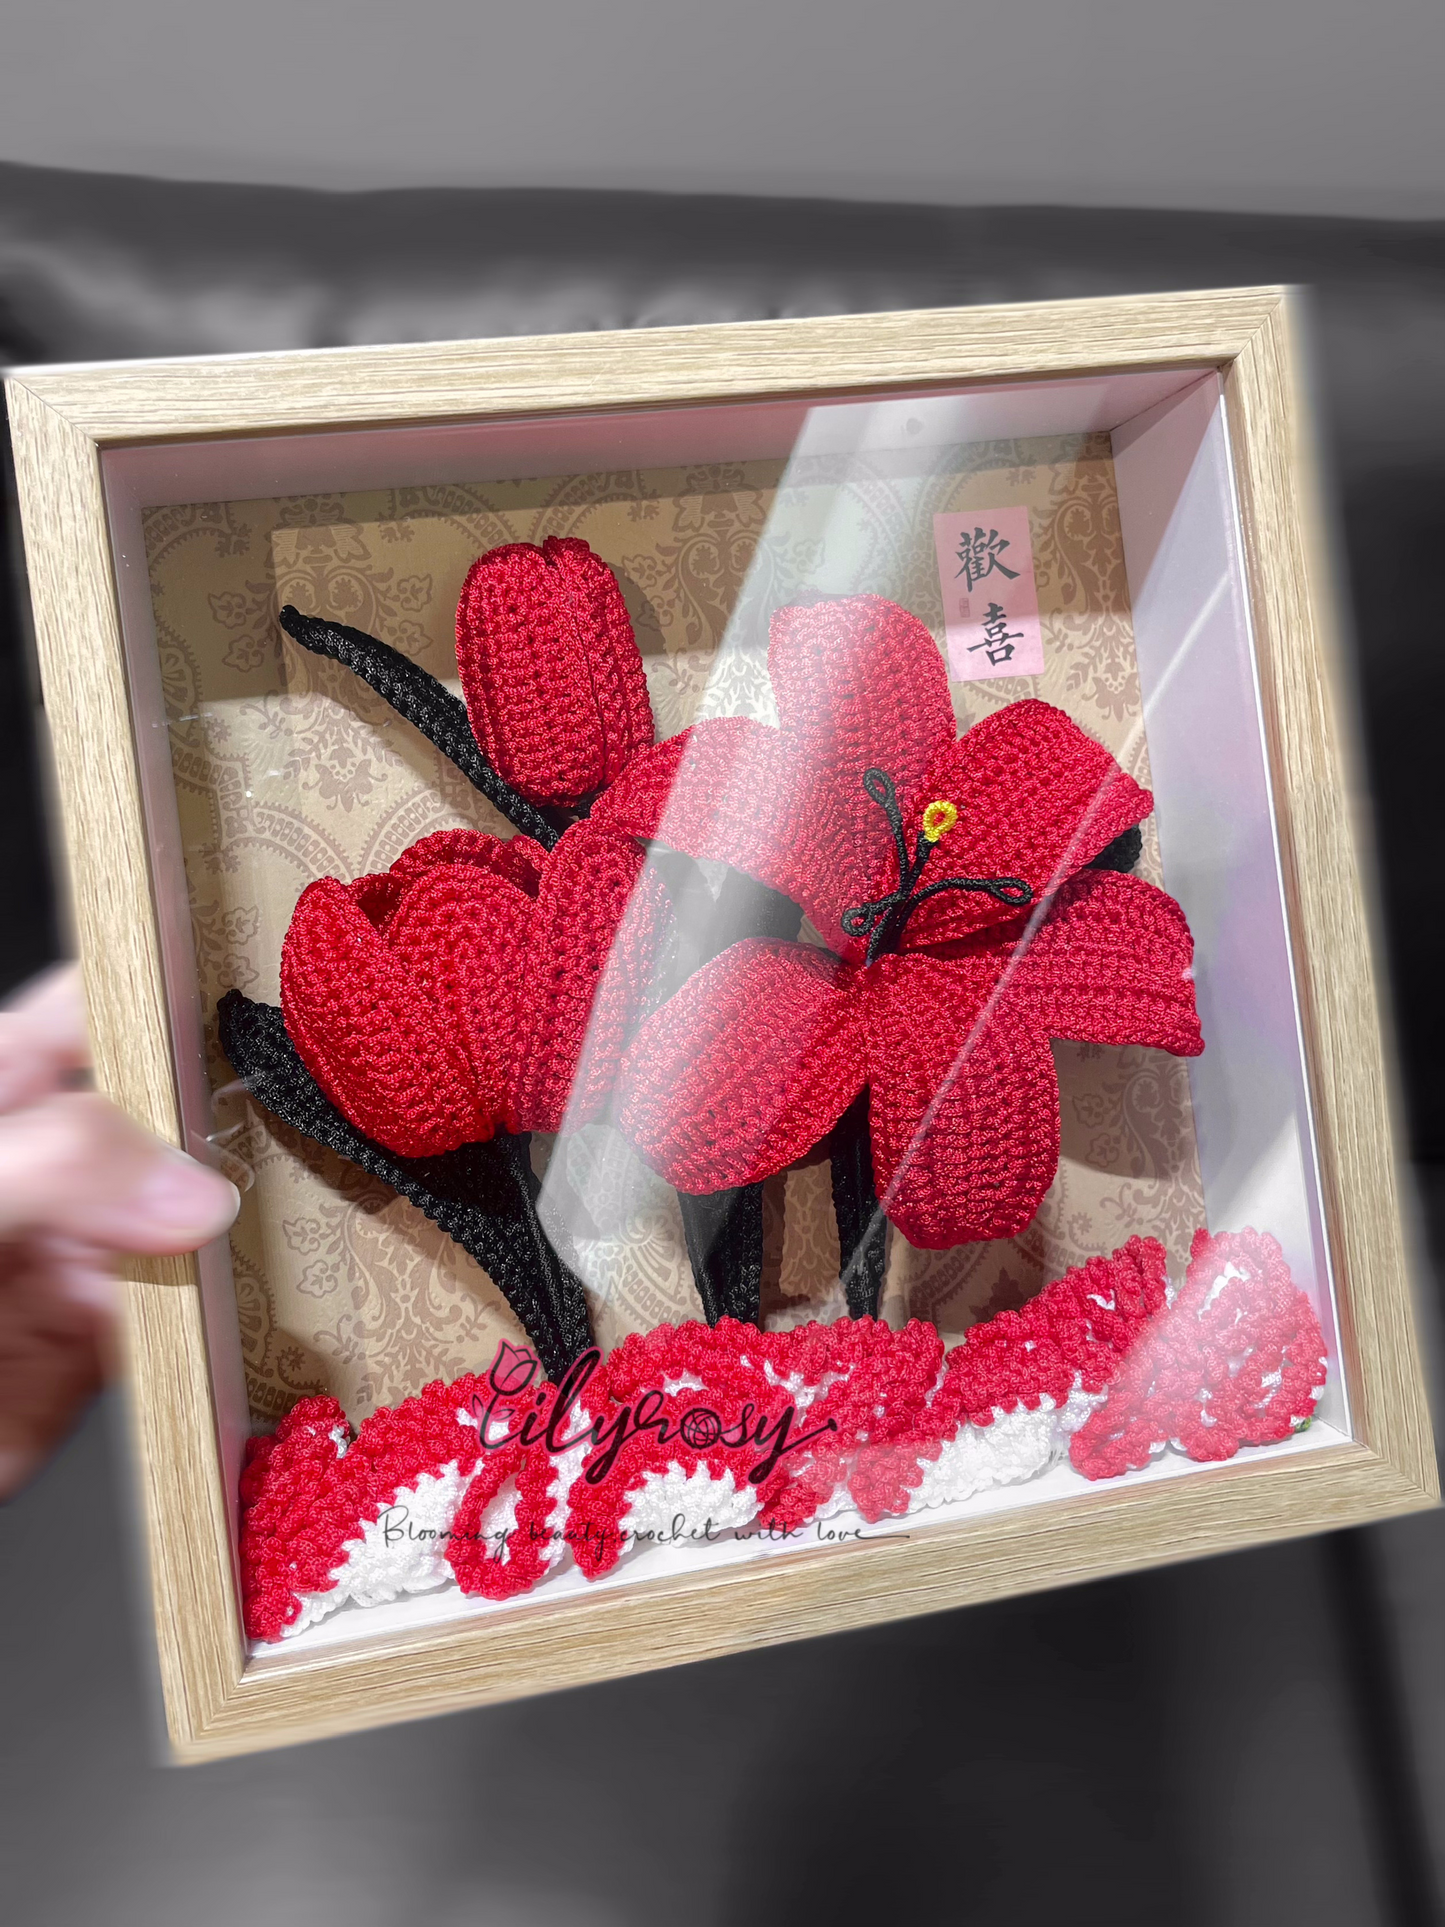 Handmade|Crochet red lilies  photo frame ,table  Decor, Office decor,home decor